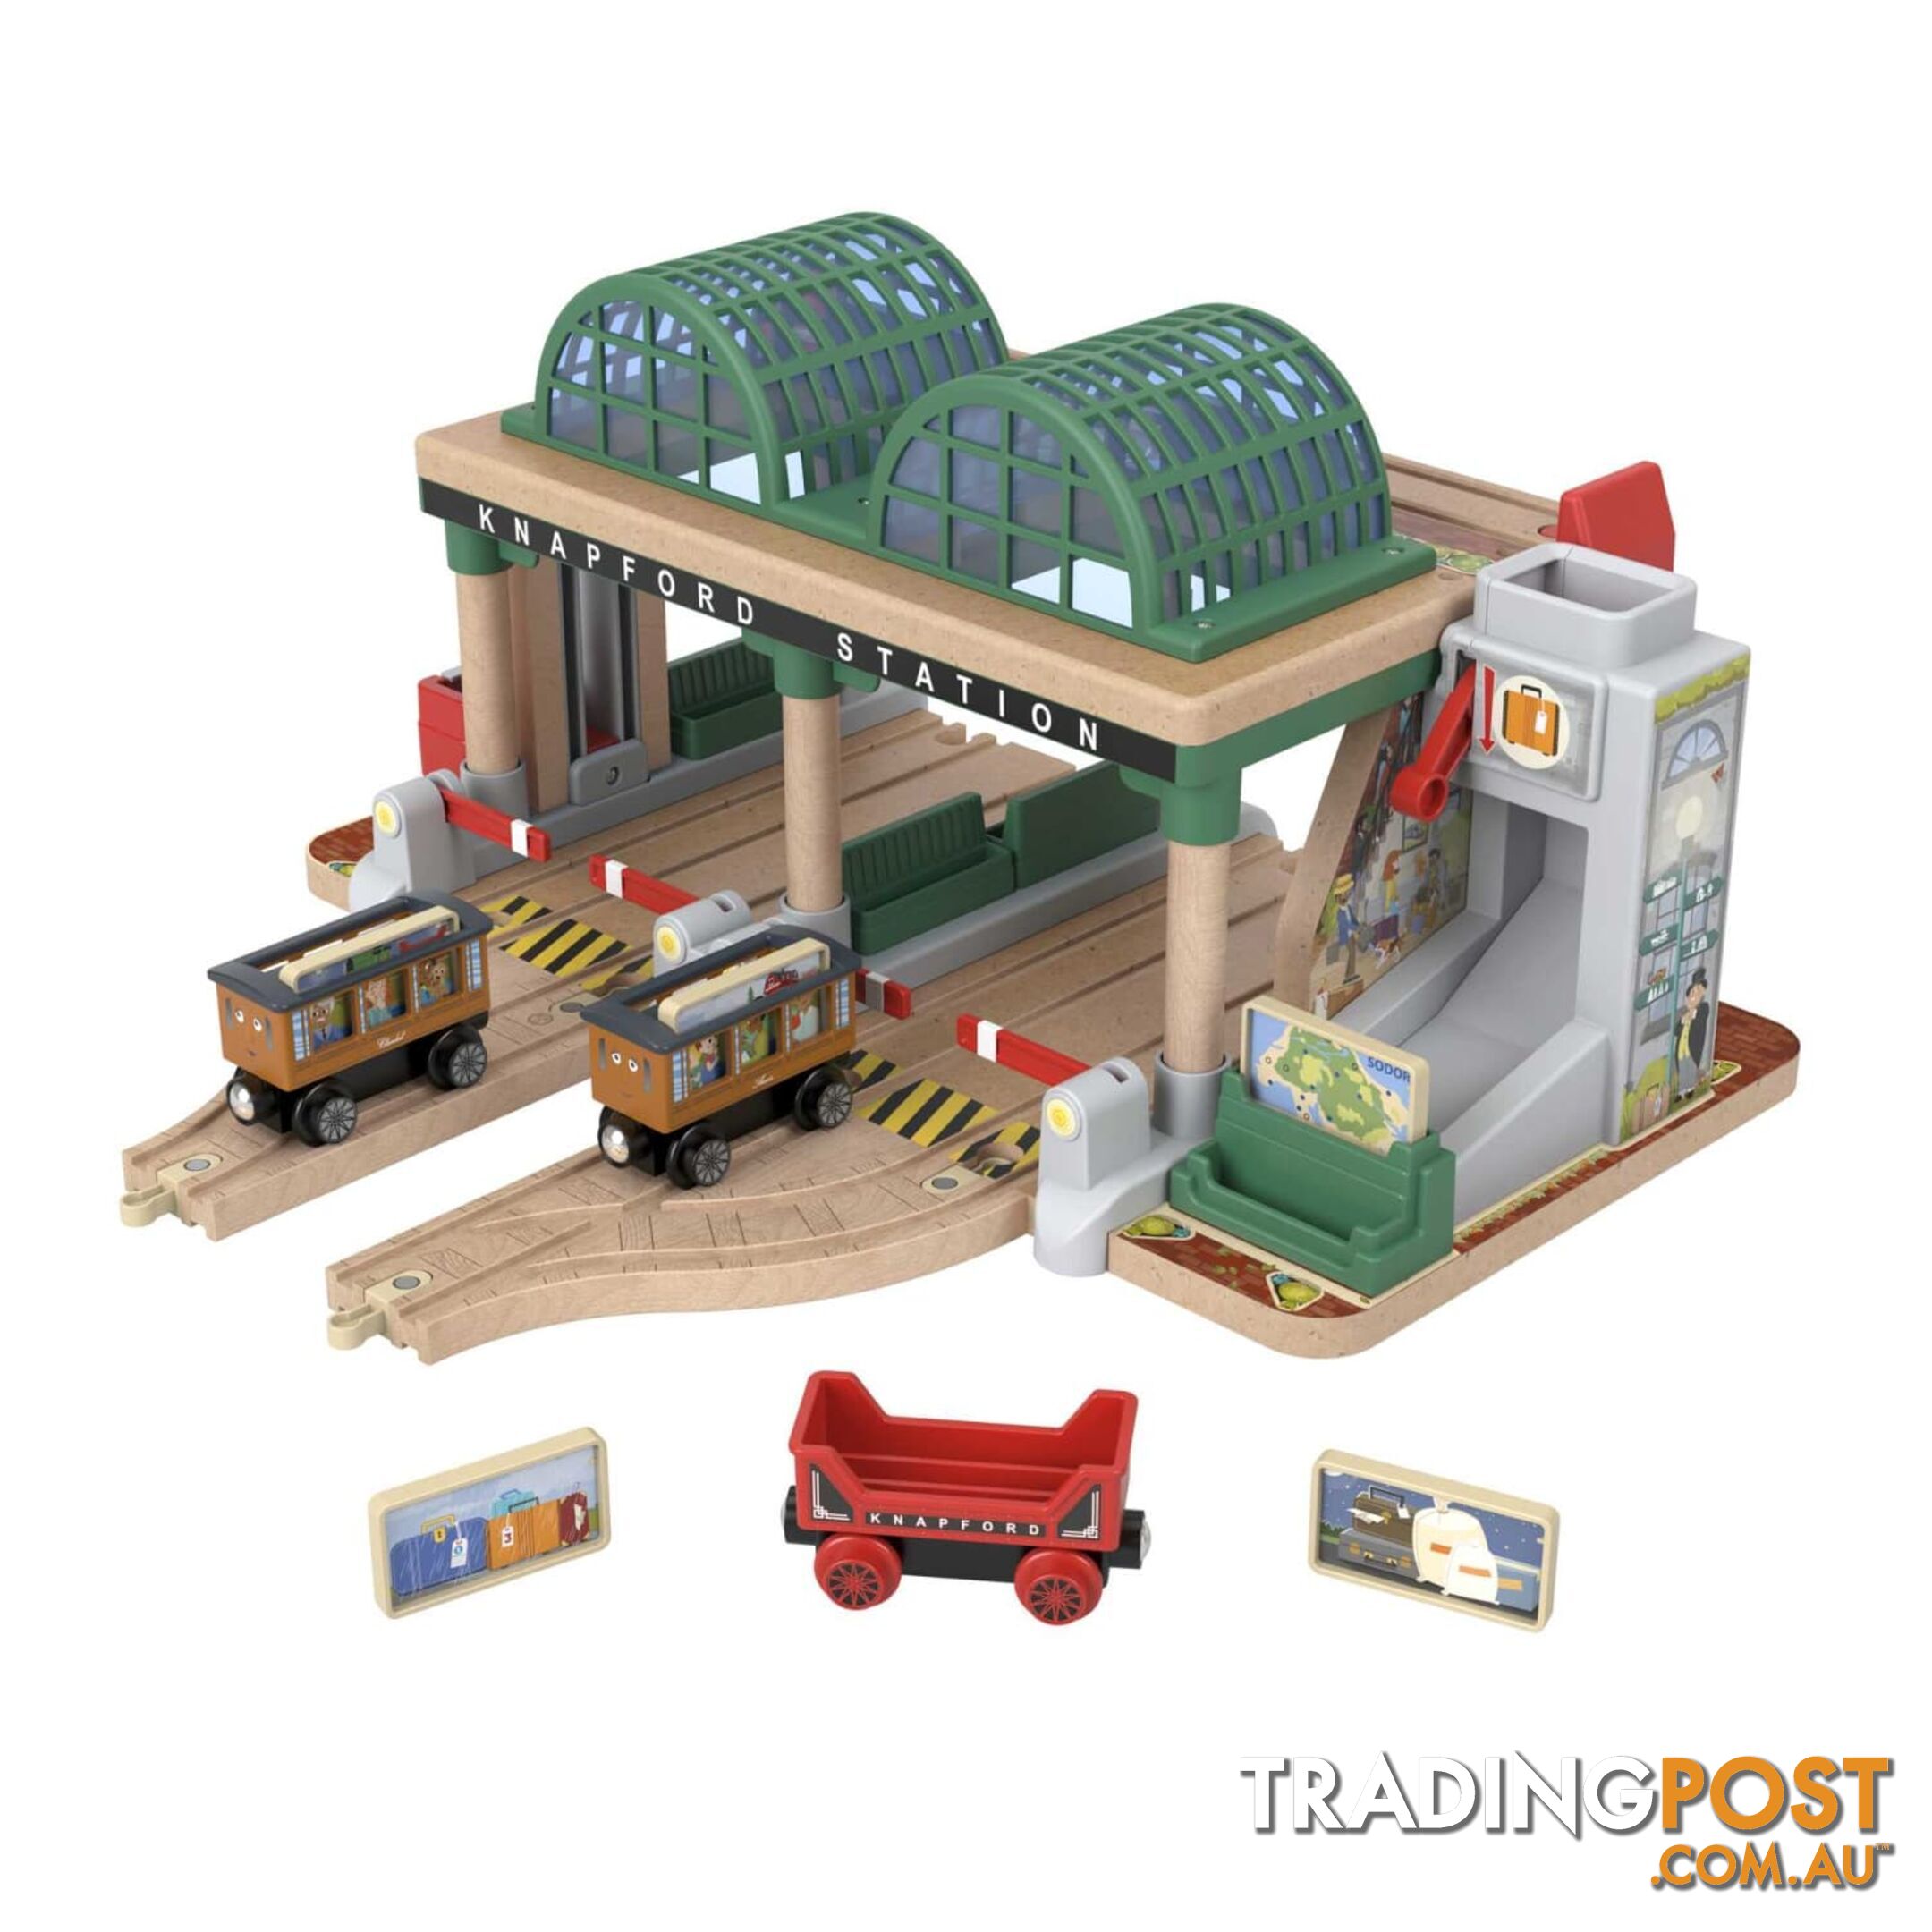 Thomas & Friends Wooden Railway Knapford Station Passenger Pickup Playset - MAHBJ82 - 887961990423